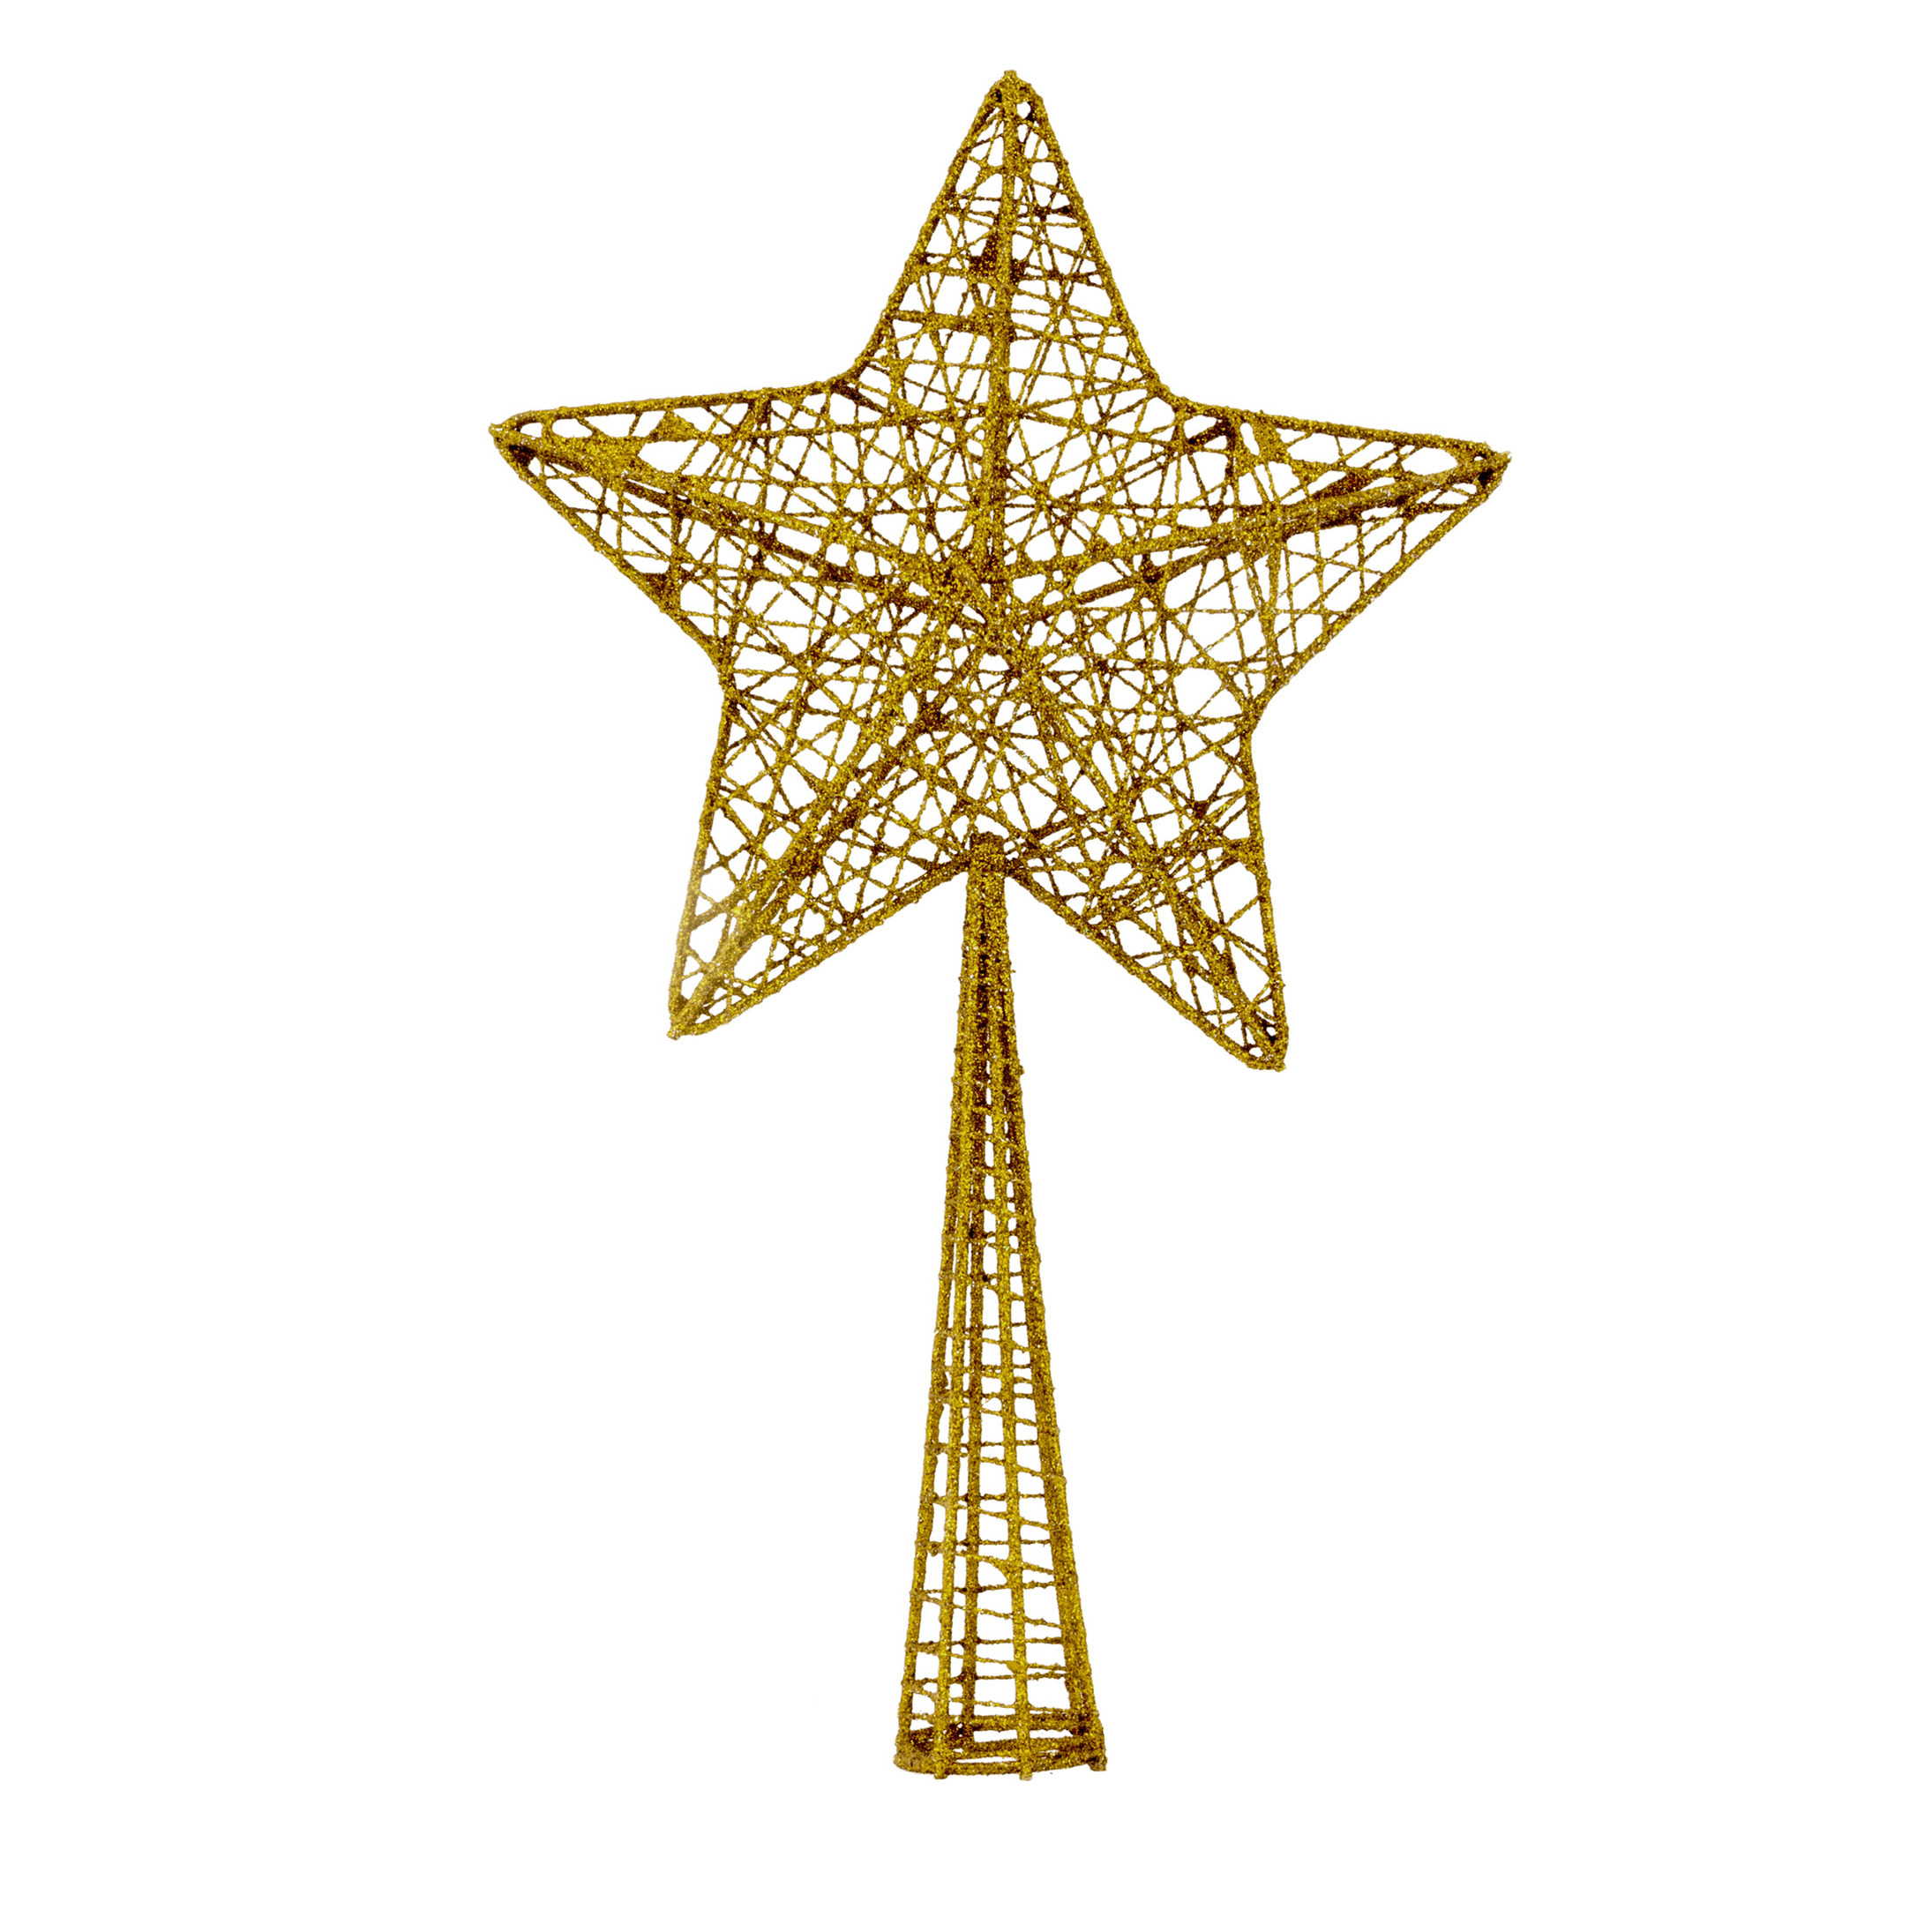 Kunststof ster piek-kerstboom topper glitter goud 28 cm